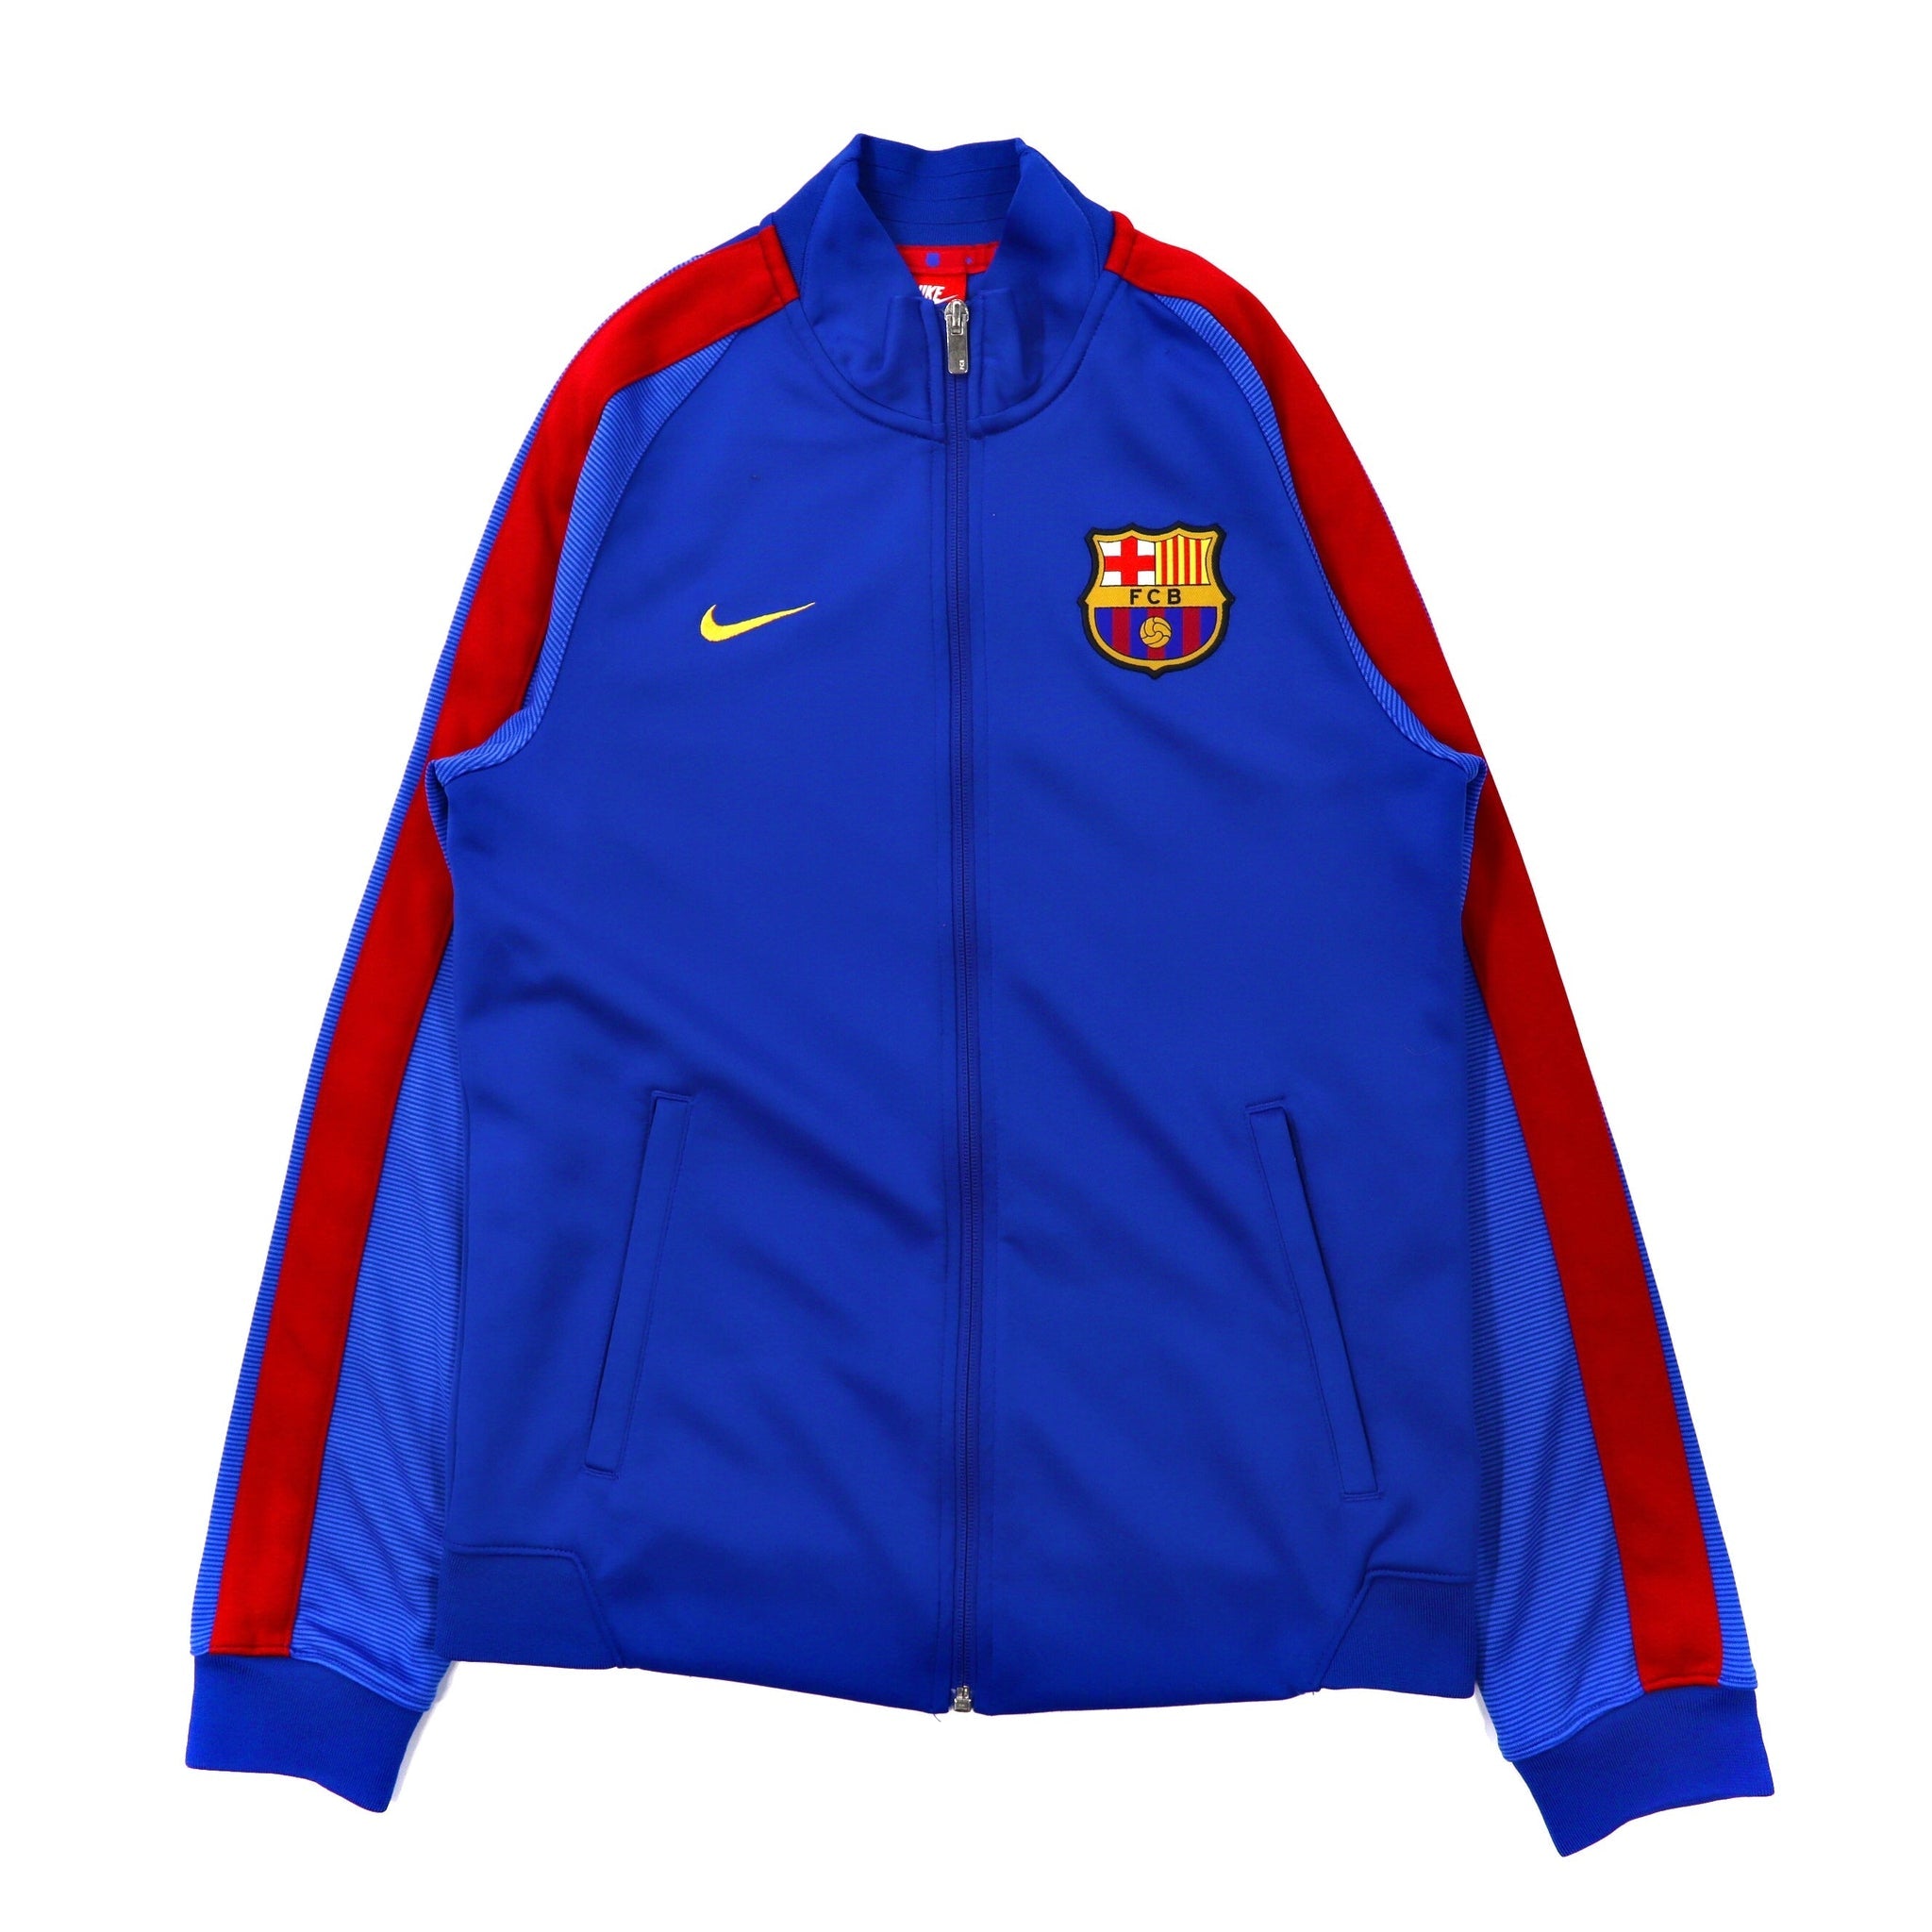 NIKE TRACK JACKET S Blue Polyester FC Barcelona logo